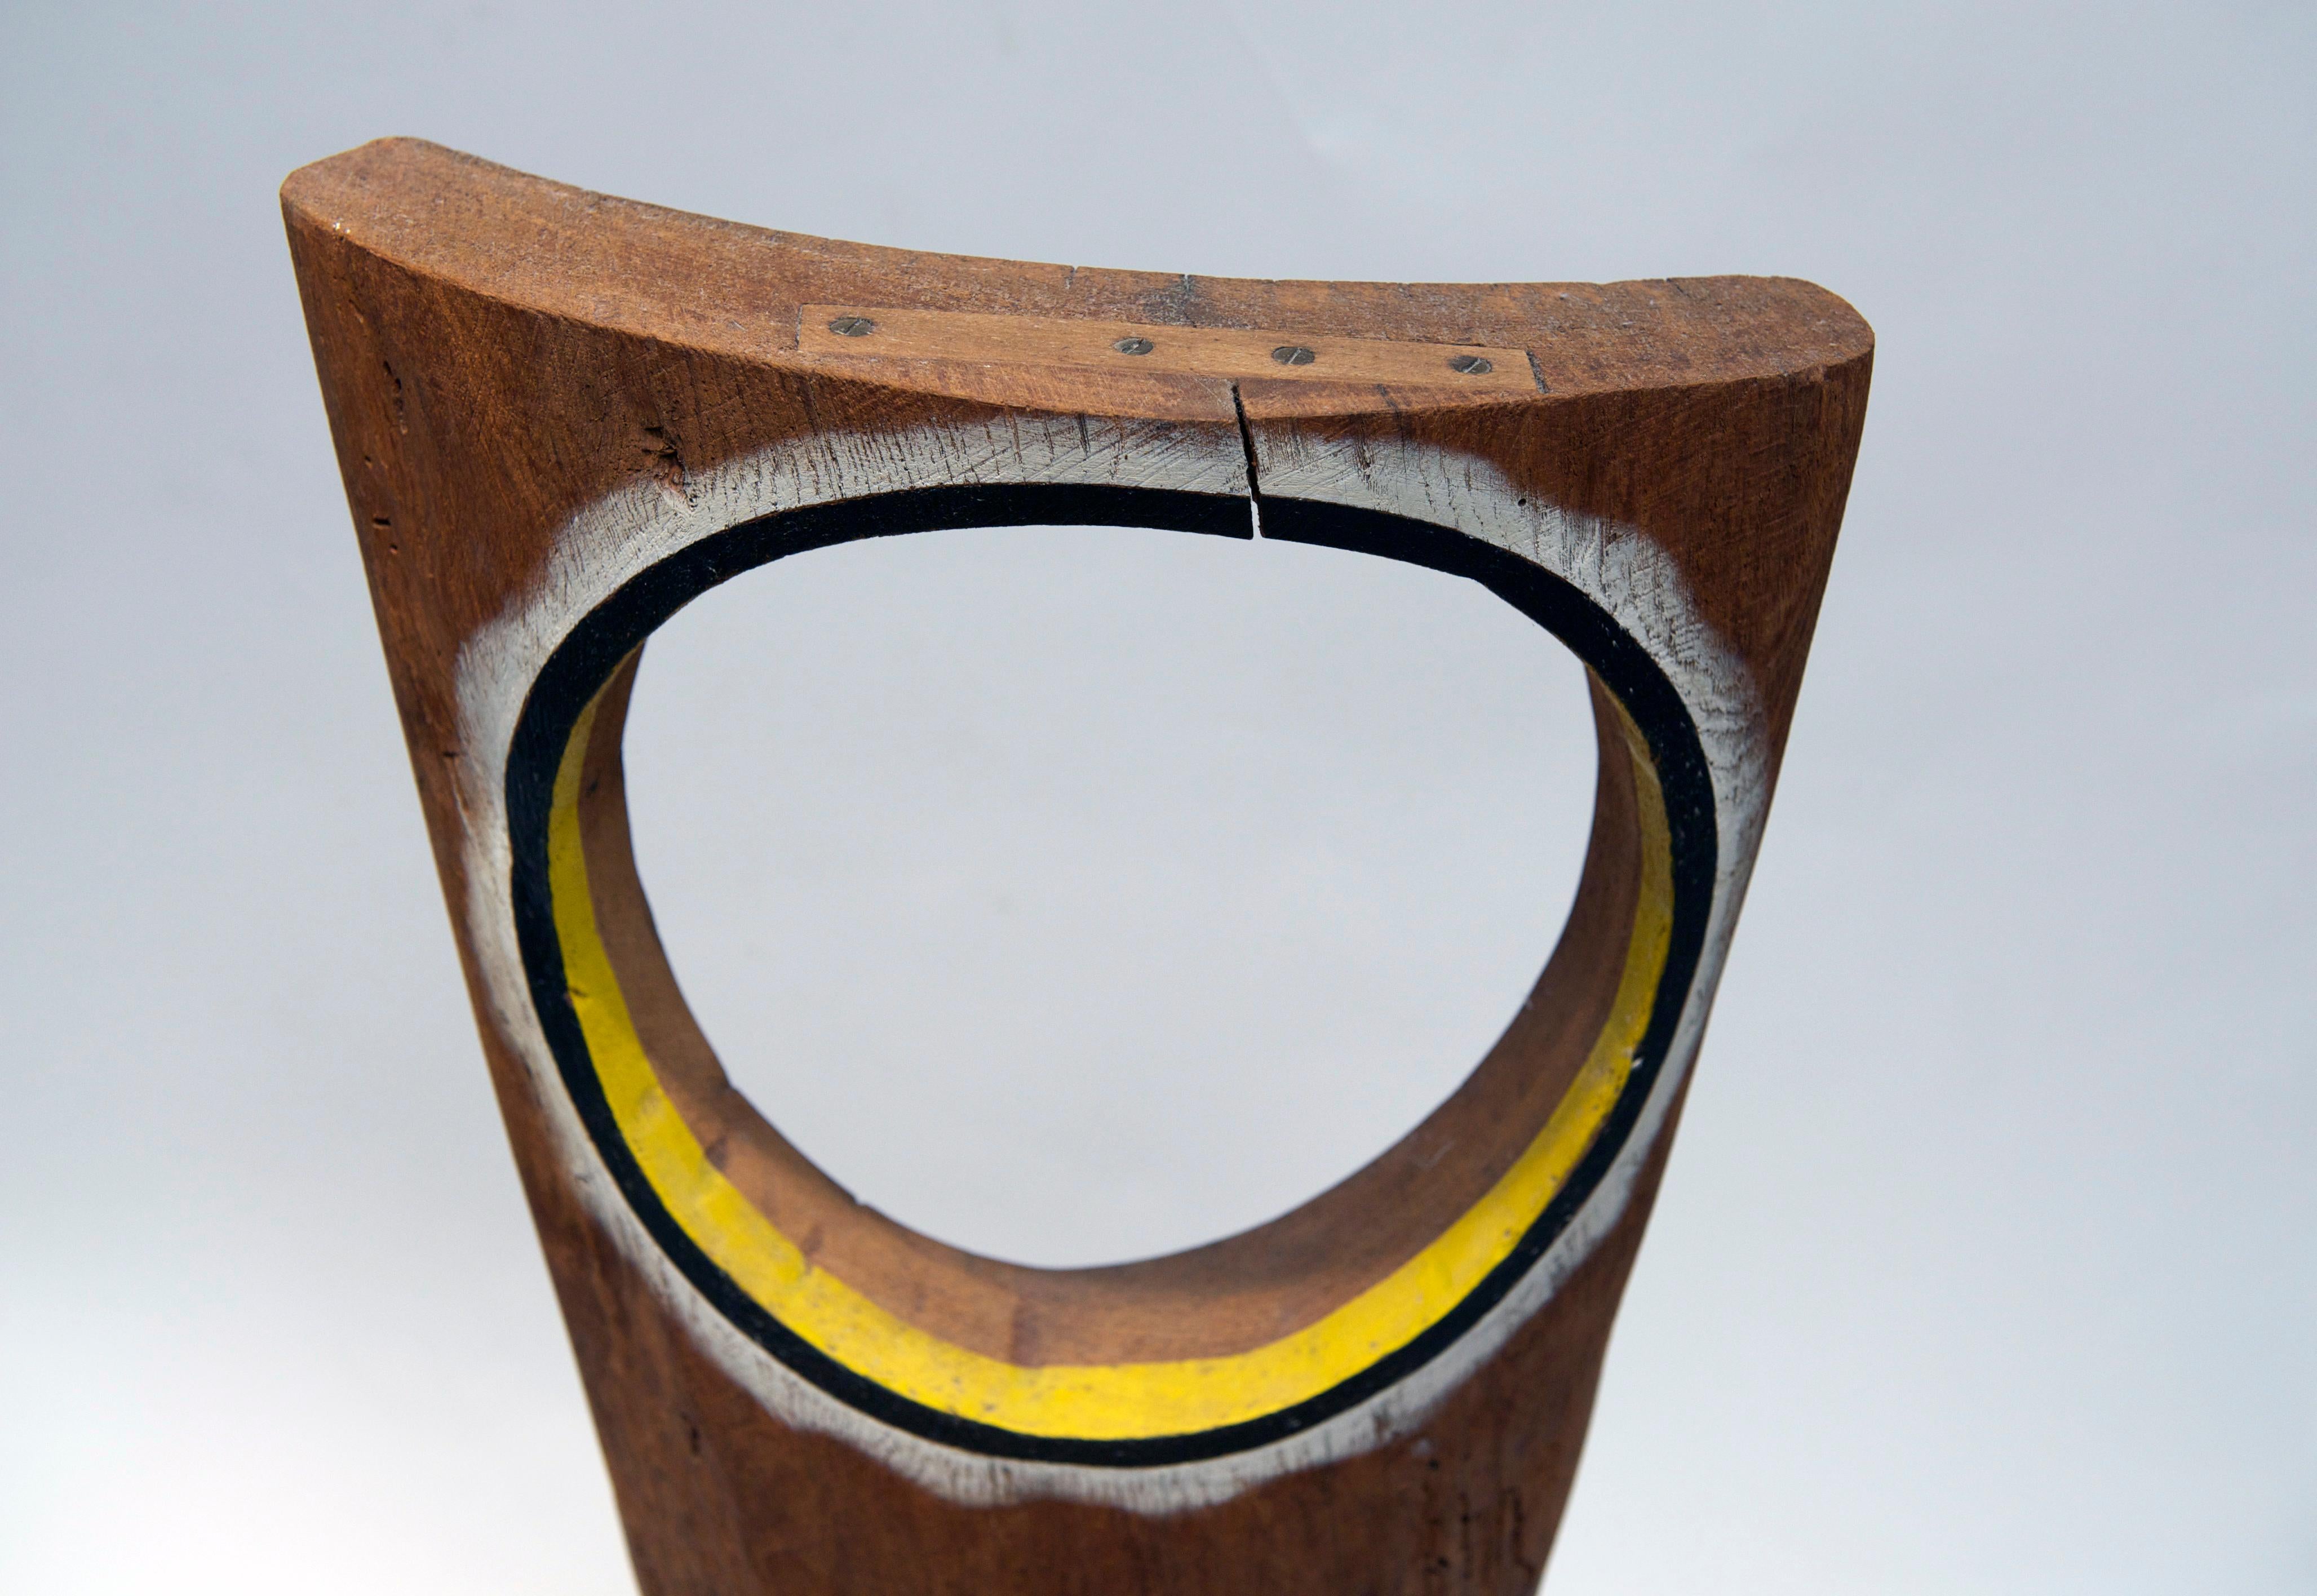  Homage to Kenneth Noland - Brown Abstract Sculpture by Andrea De Zerega